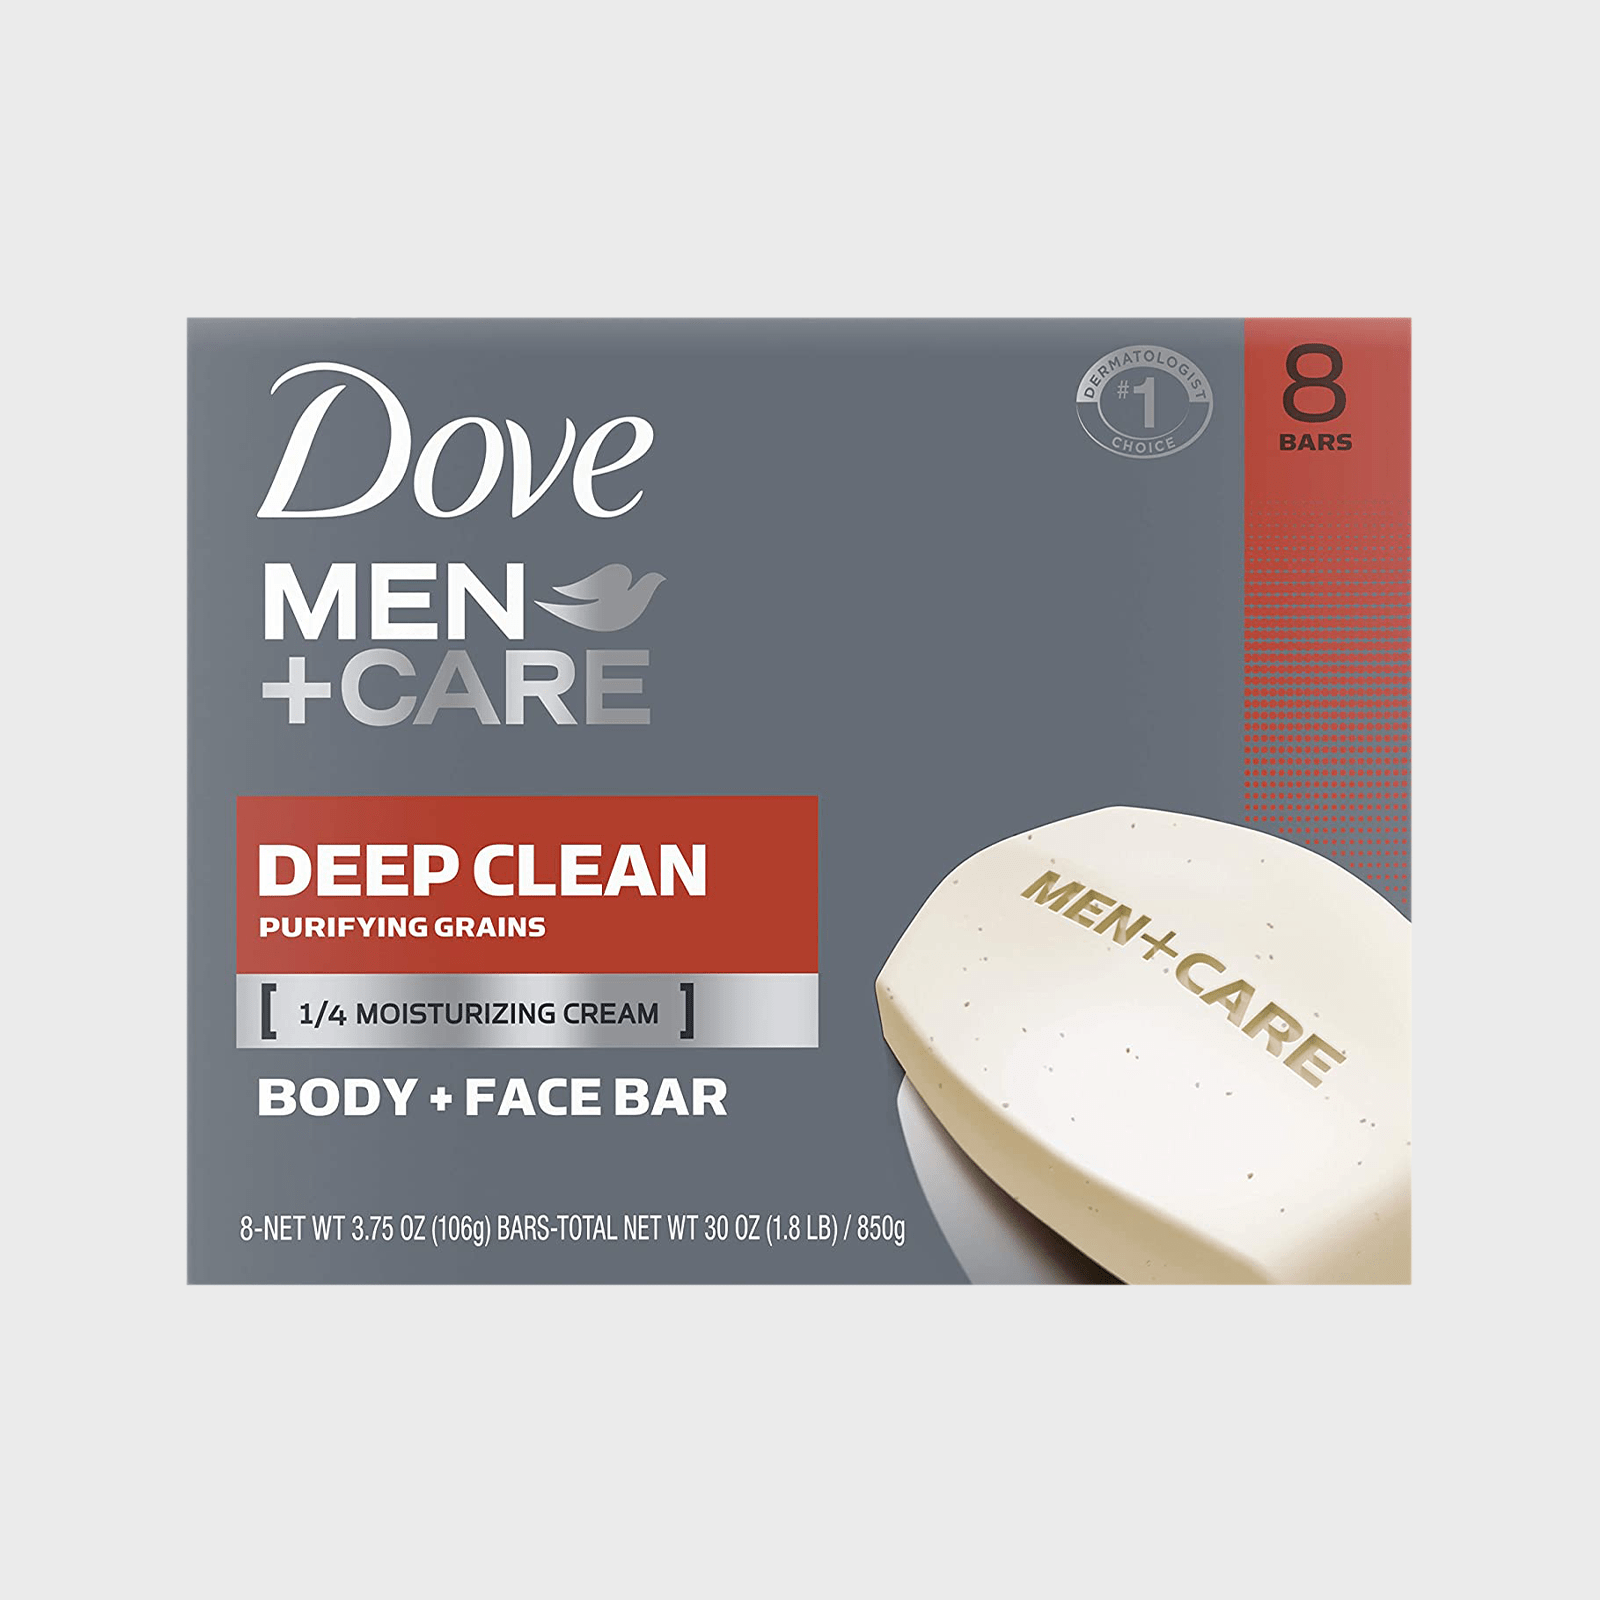 Dove Men And Care Body Face Bar Ecomm Via Amazon.com